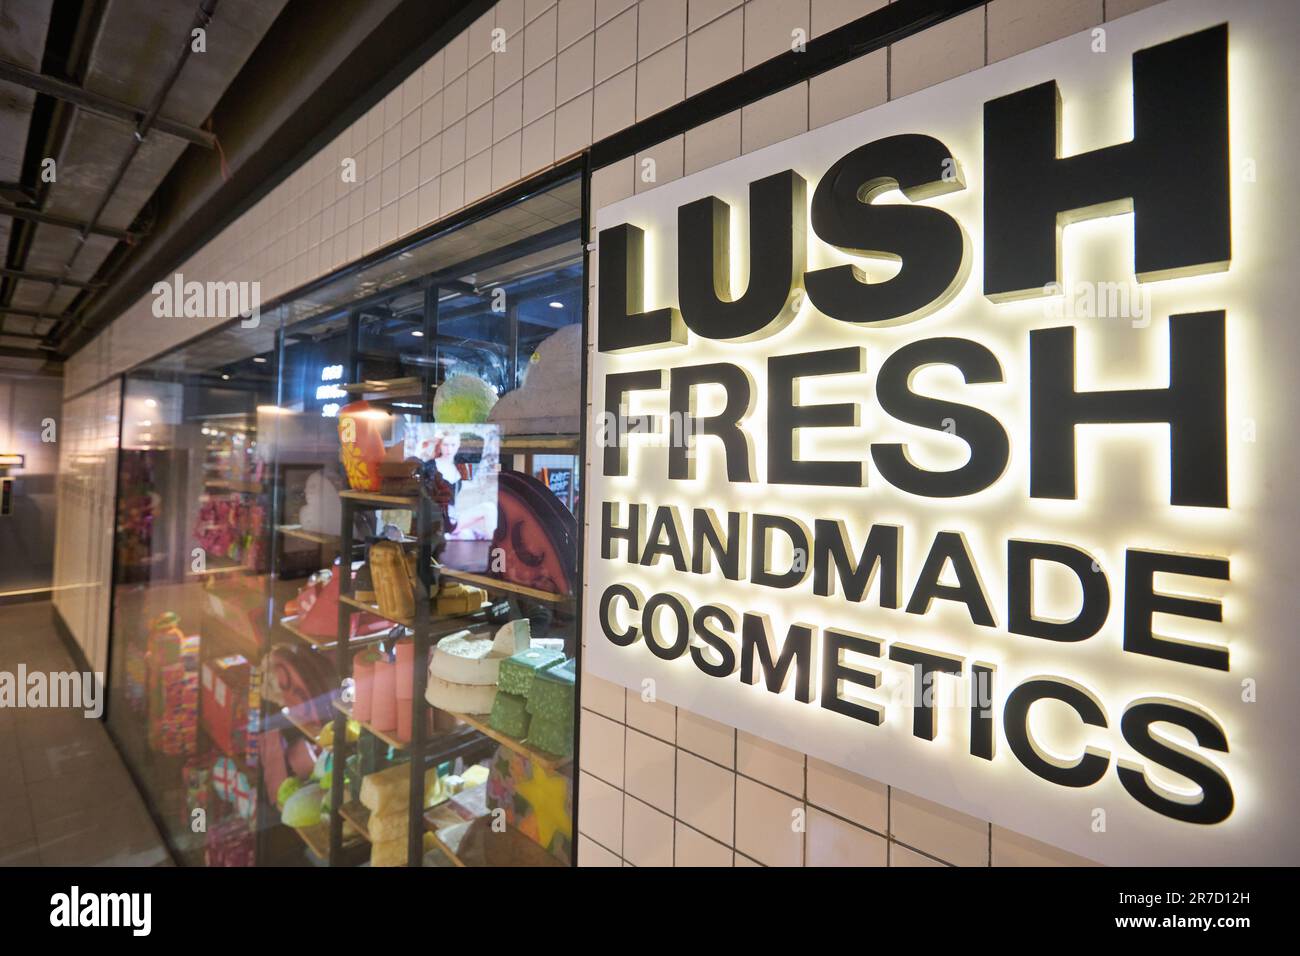 LUSH Fresh Handmade Cosmetics (Granville Road) - Cosmetics Shop